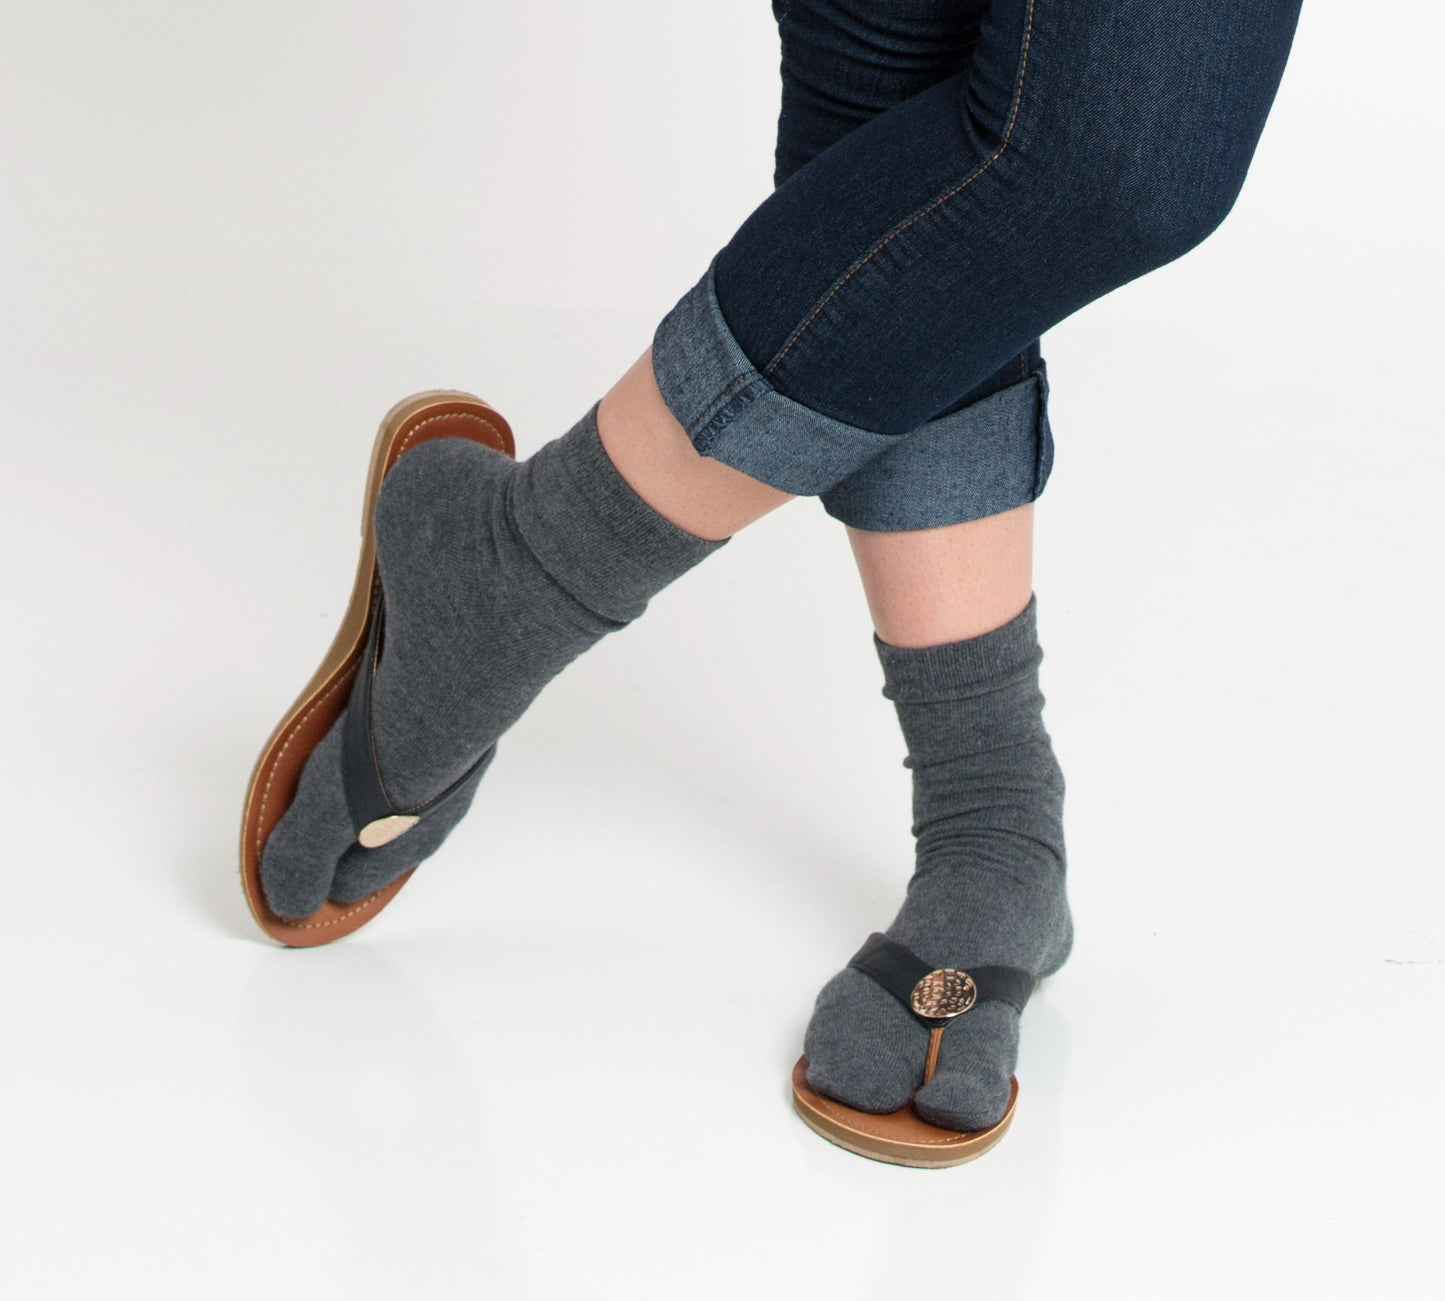 3 Pairs - Split-Toe Tabi Socks Black, White, Khaki and Grey Options Solid Casual Crew